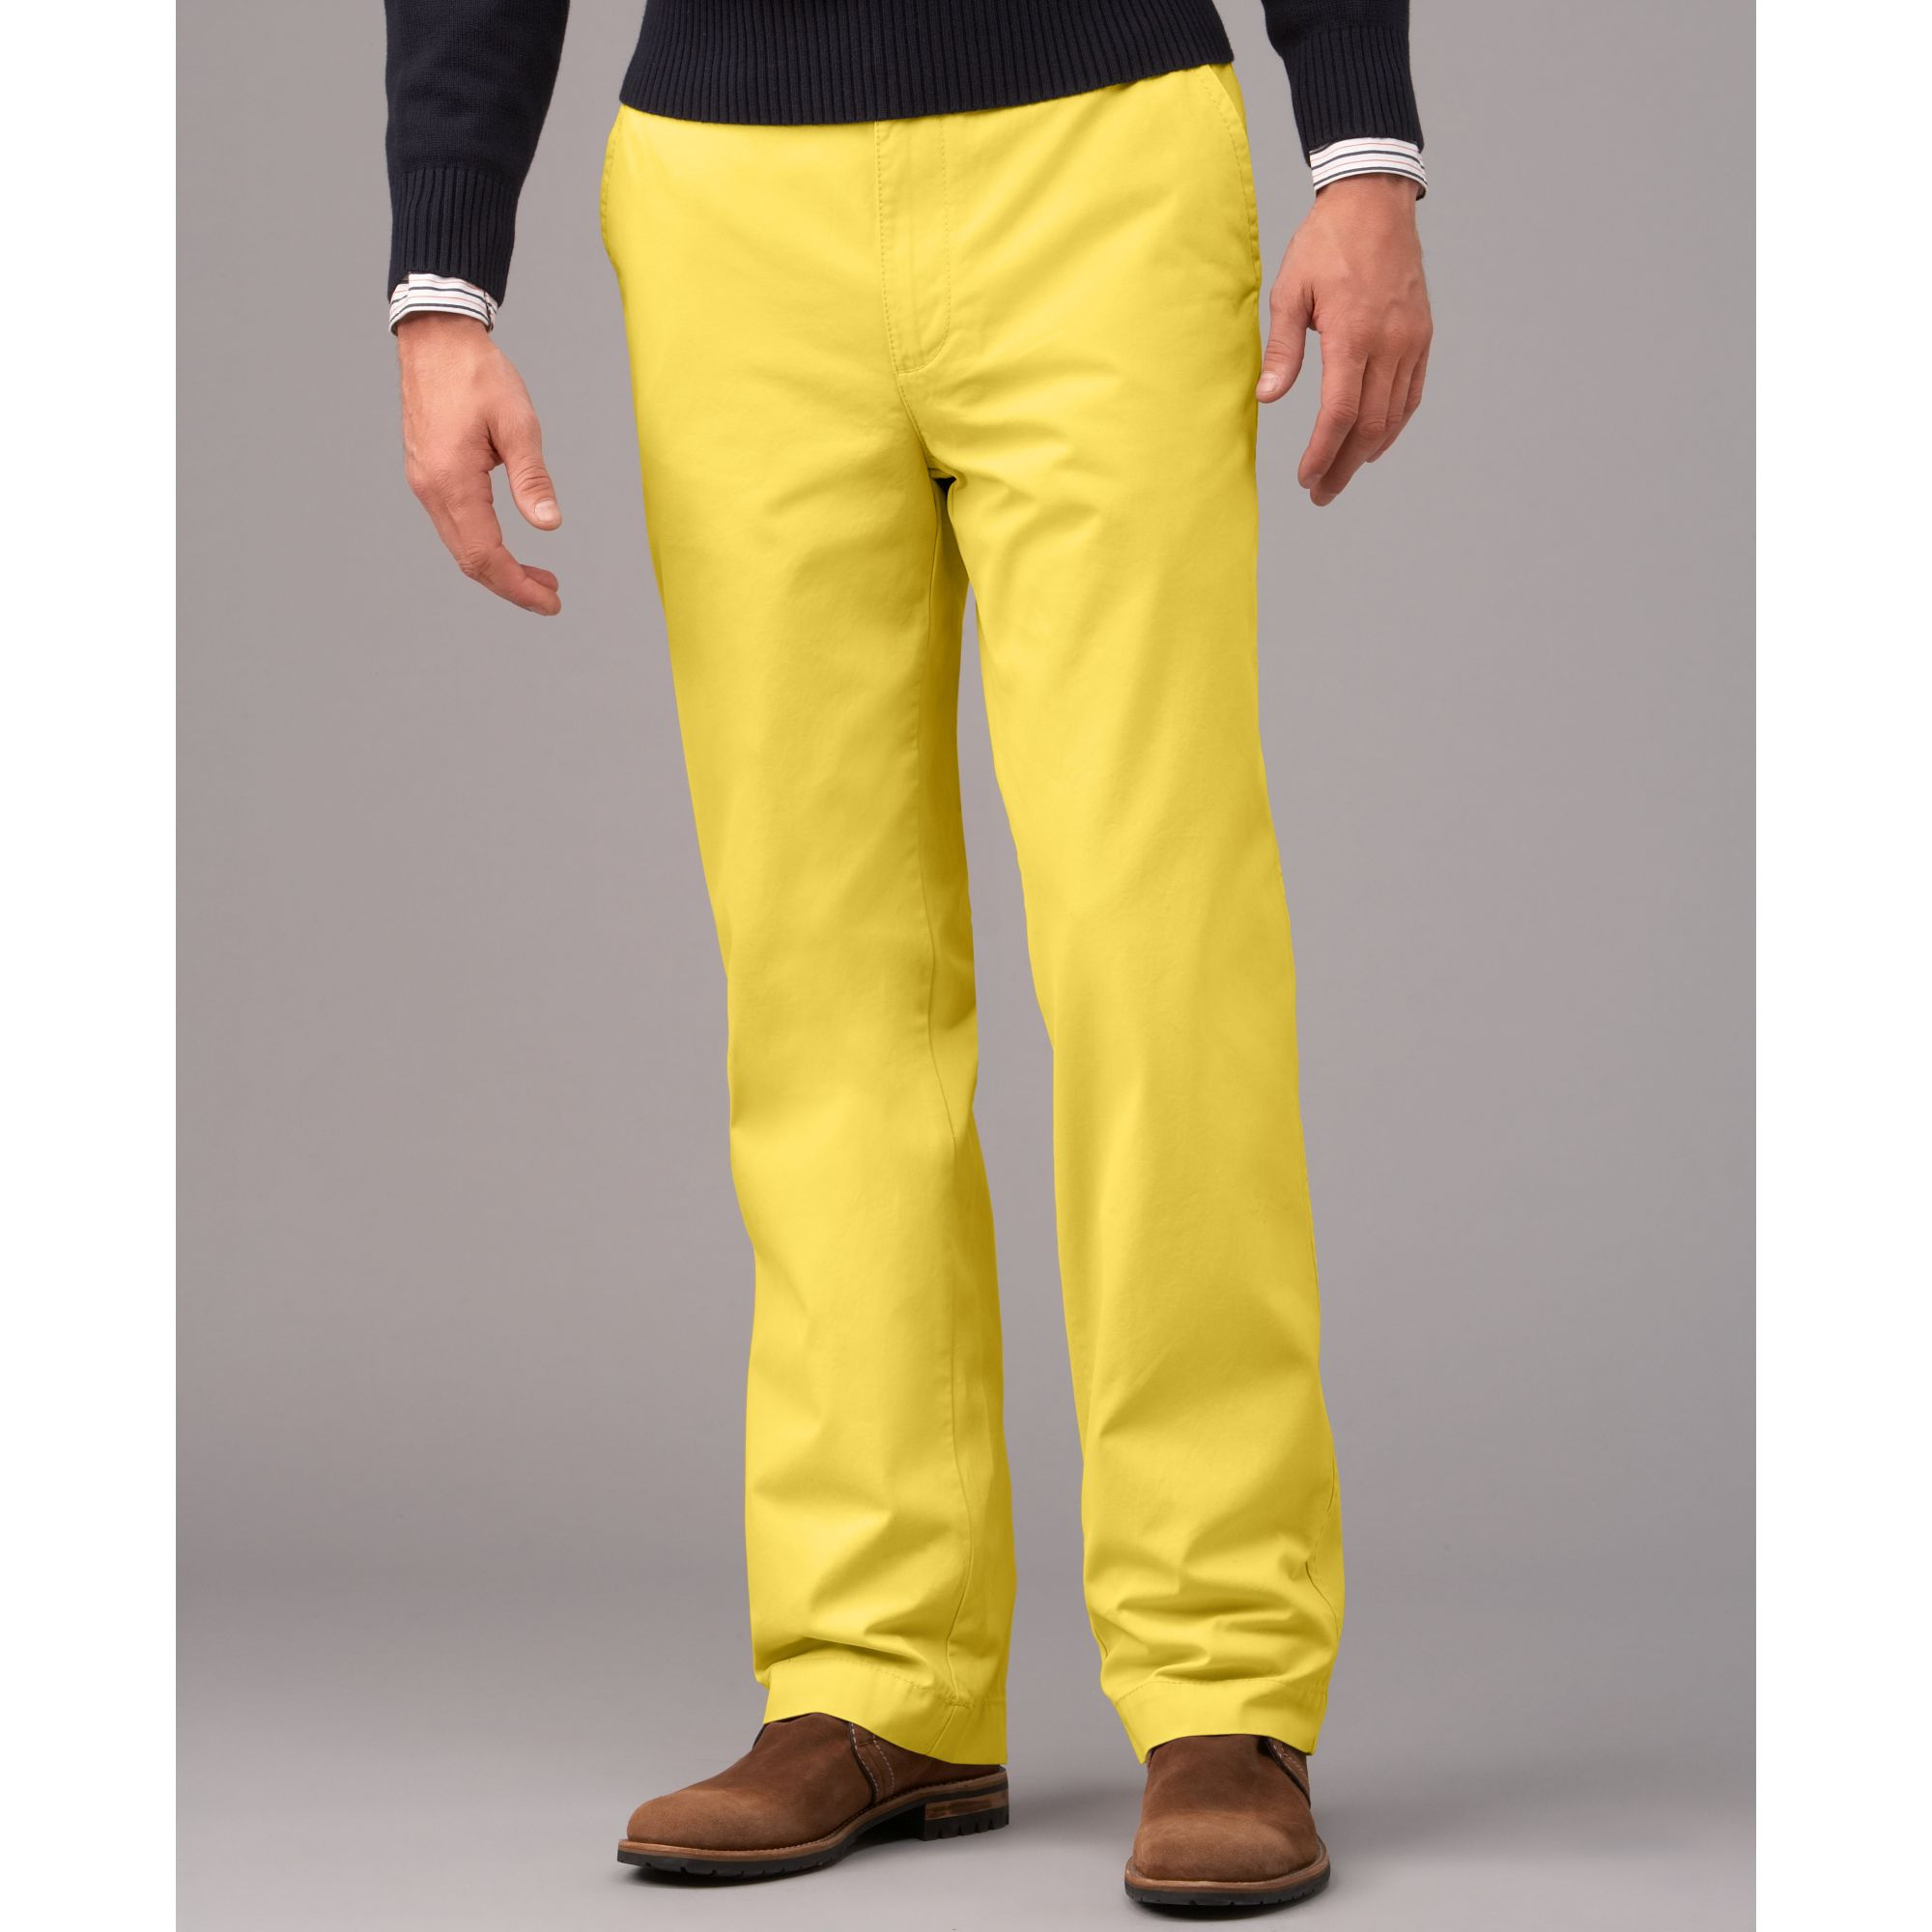 Aliexpress.com : Buy Bright Yellow Short Pants Style Men